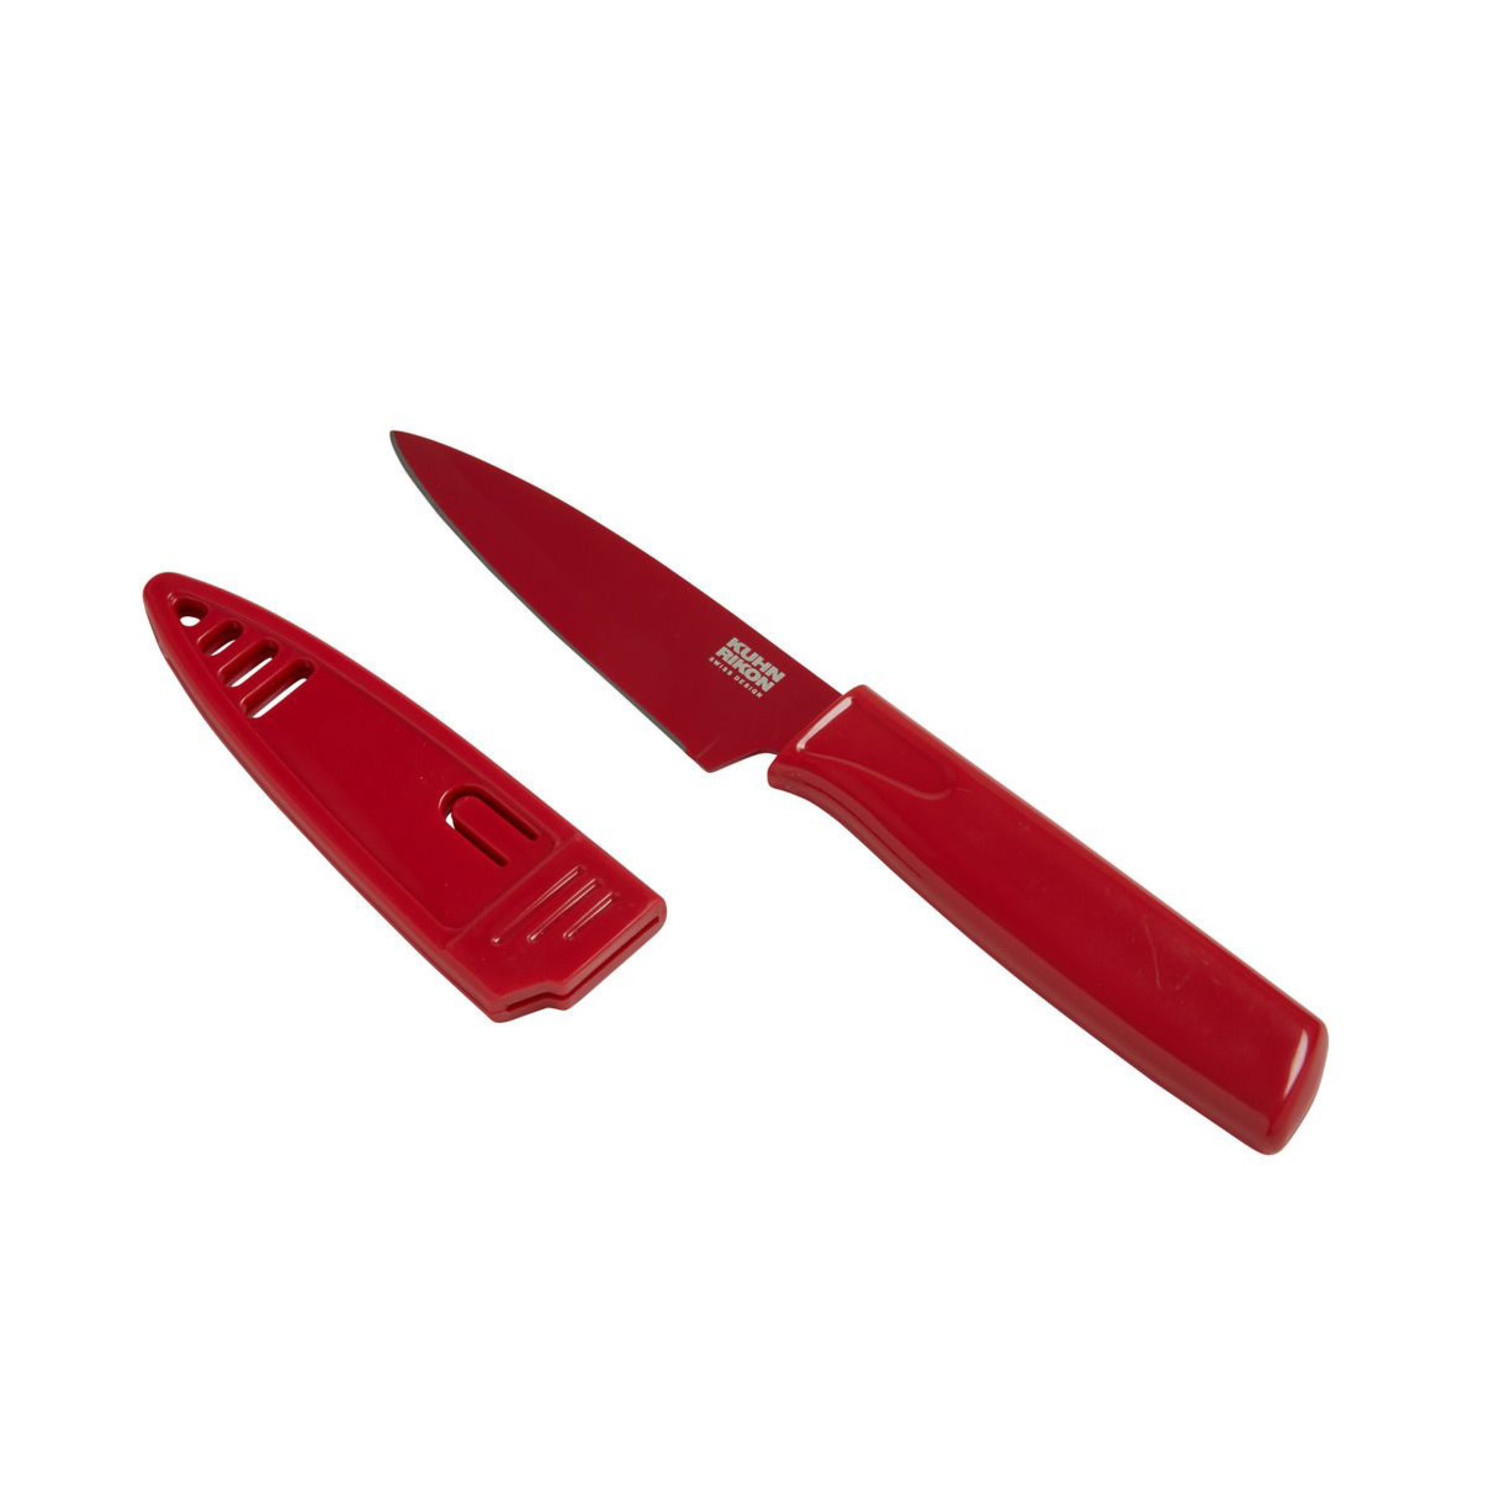 Kuhn Rikon Colori 4 Serrated Paring Knife at Swiss Knife Shop